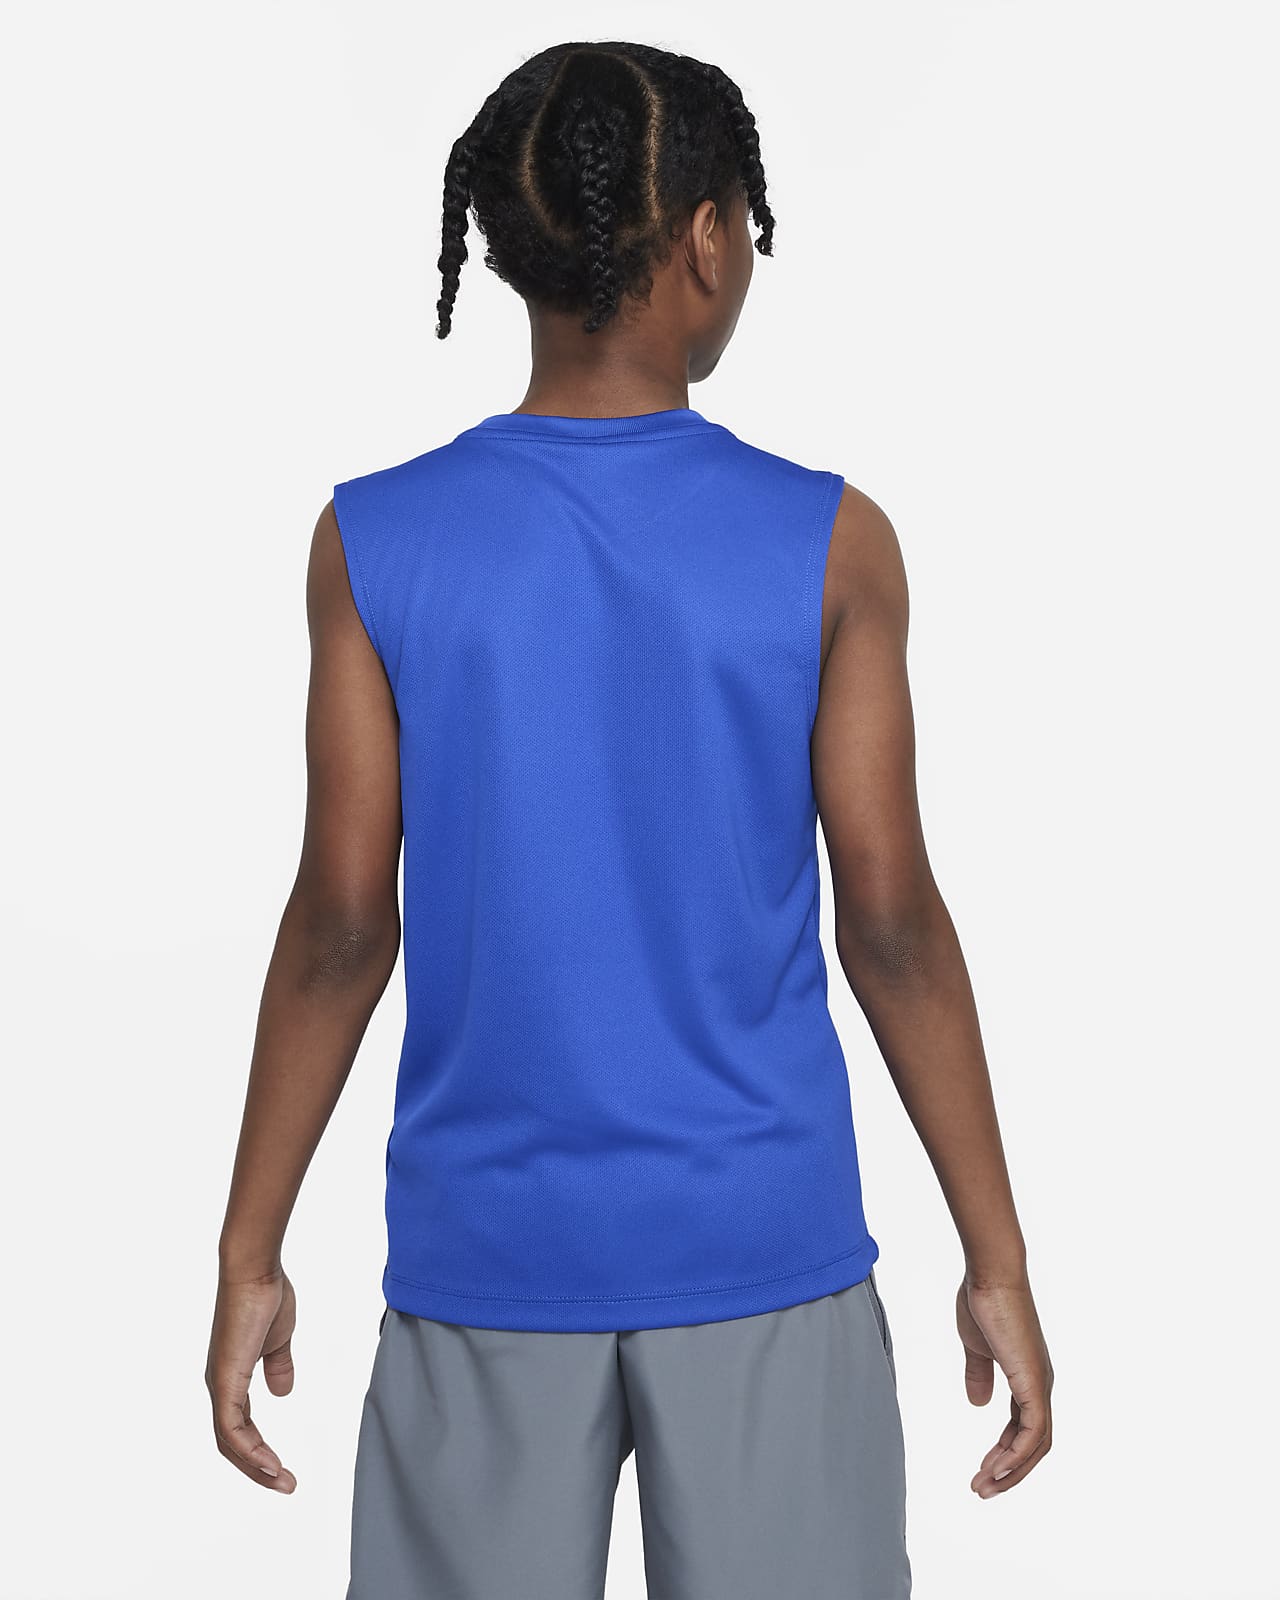 Nike, Shirts & Tops, Nike Drifit Athletic Tank Girls Size Small Two Tone  Blue